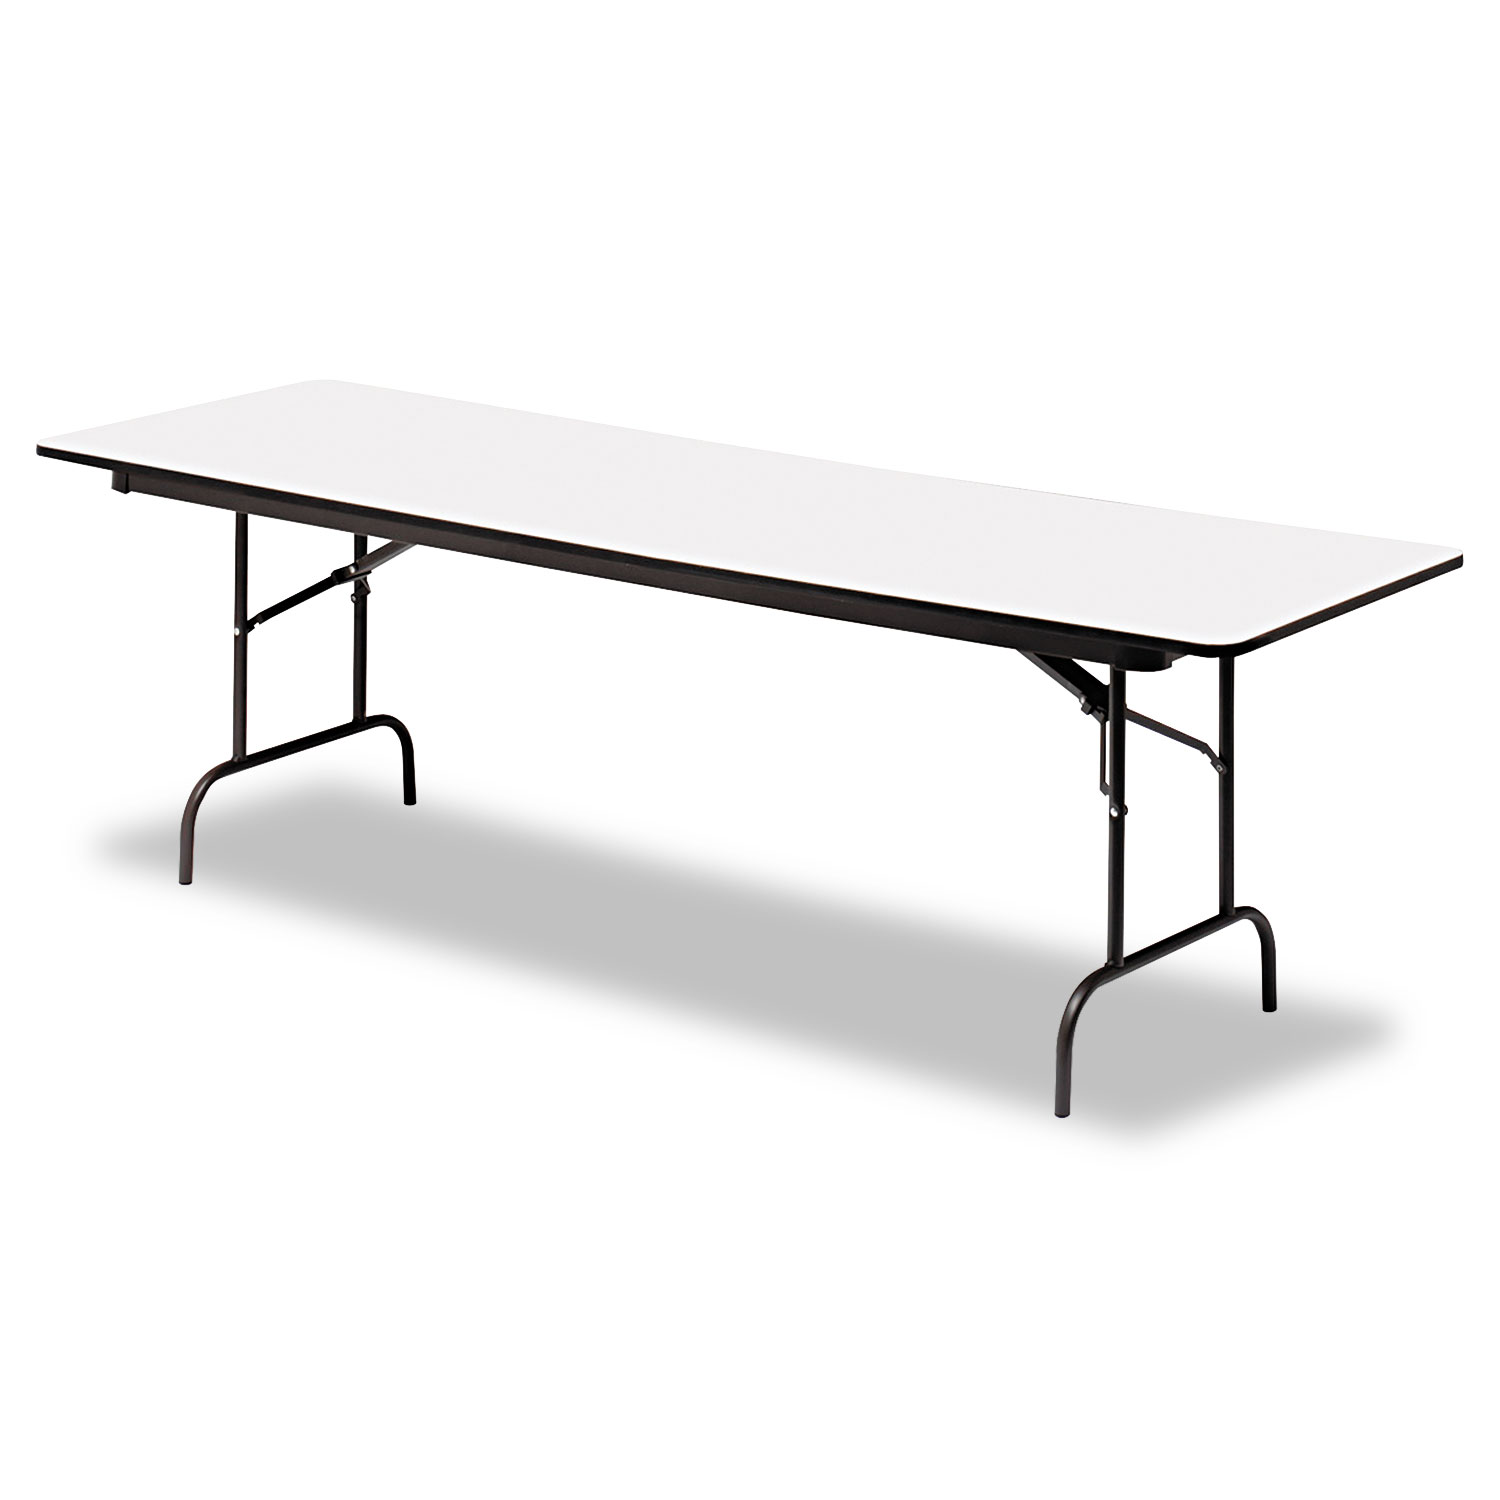  Iceberg 55237 Premium Wood Laminate Folding Table, Rectangular, 96w x 30d x 29h, Gray/Charcoal (ICE55237) 